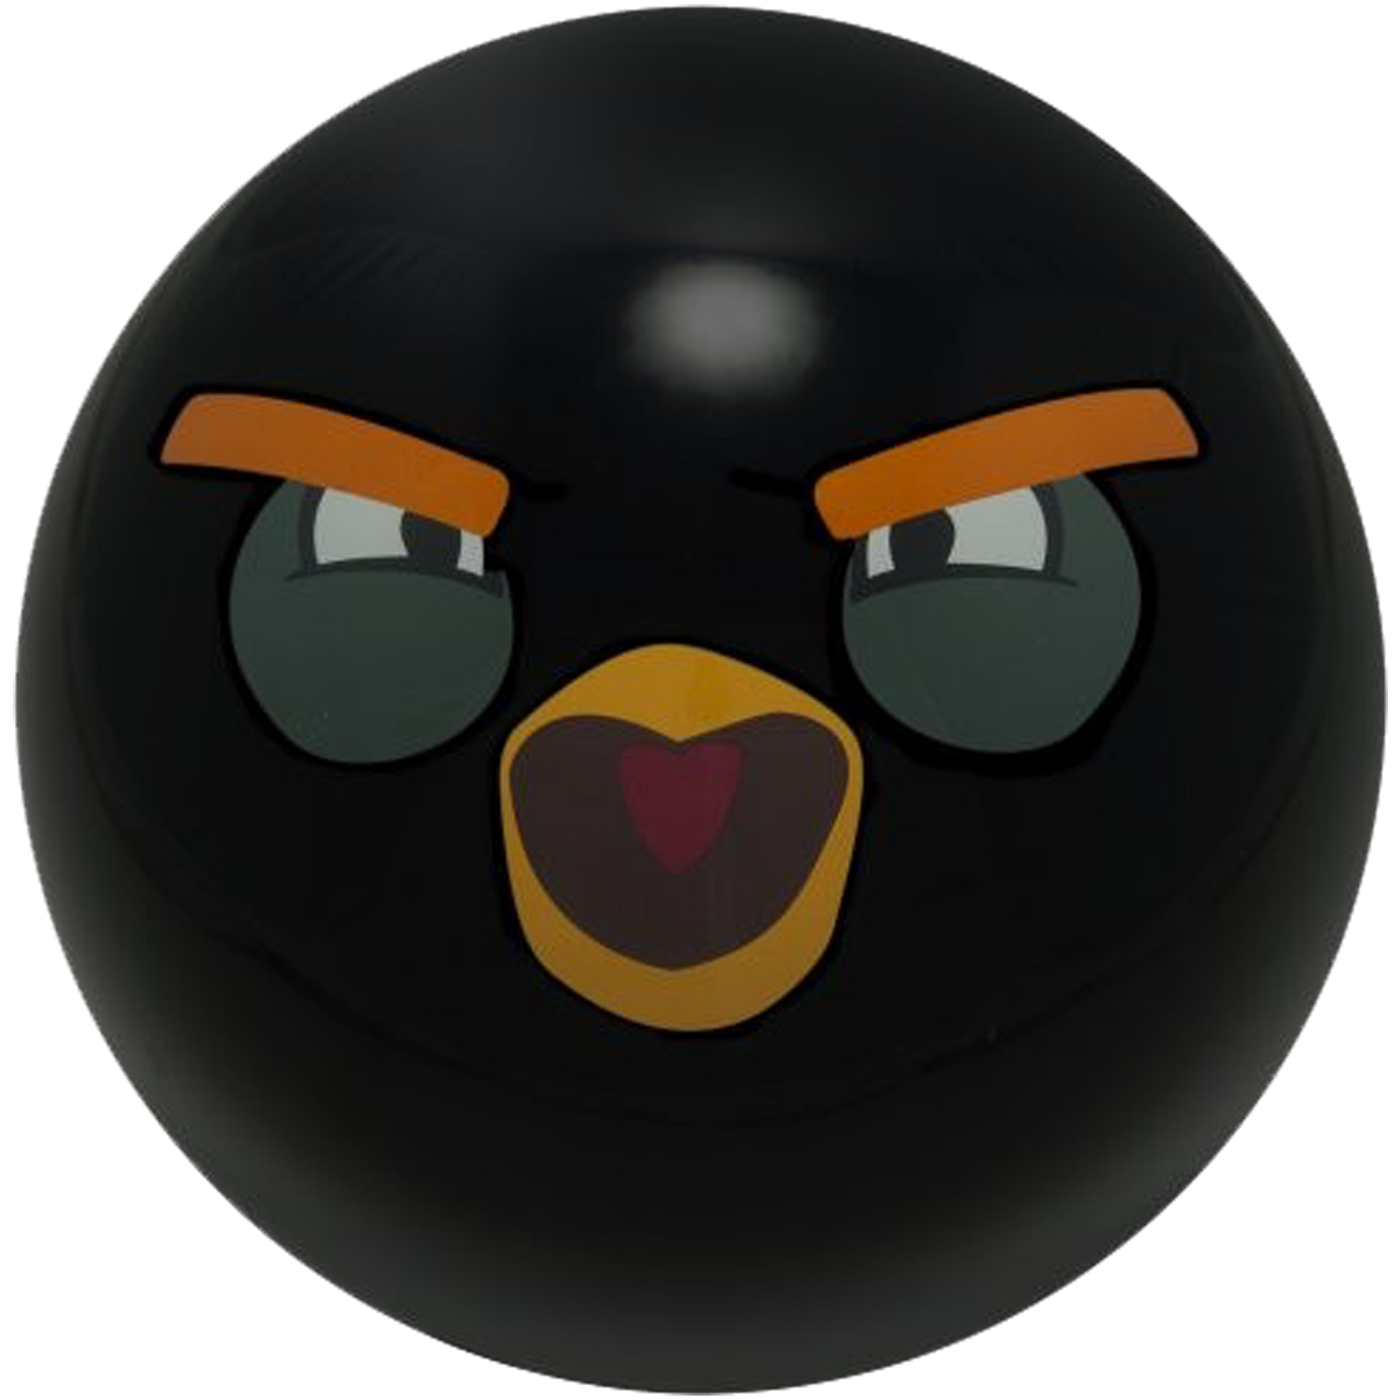 Angry Birds Black Bowling Ball